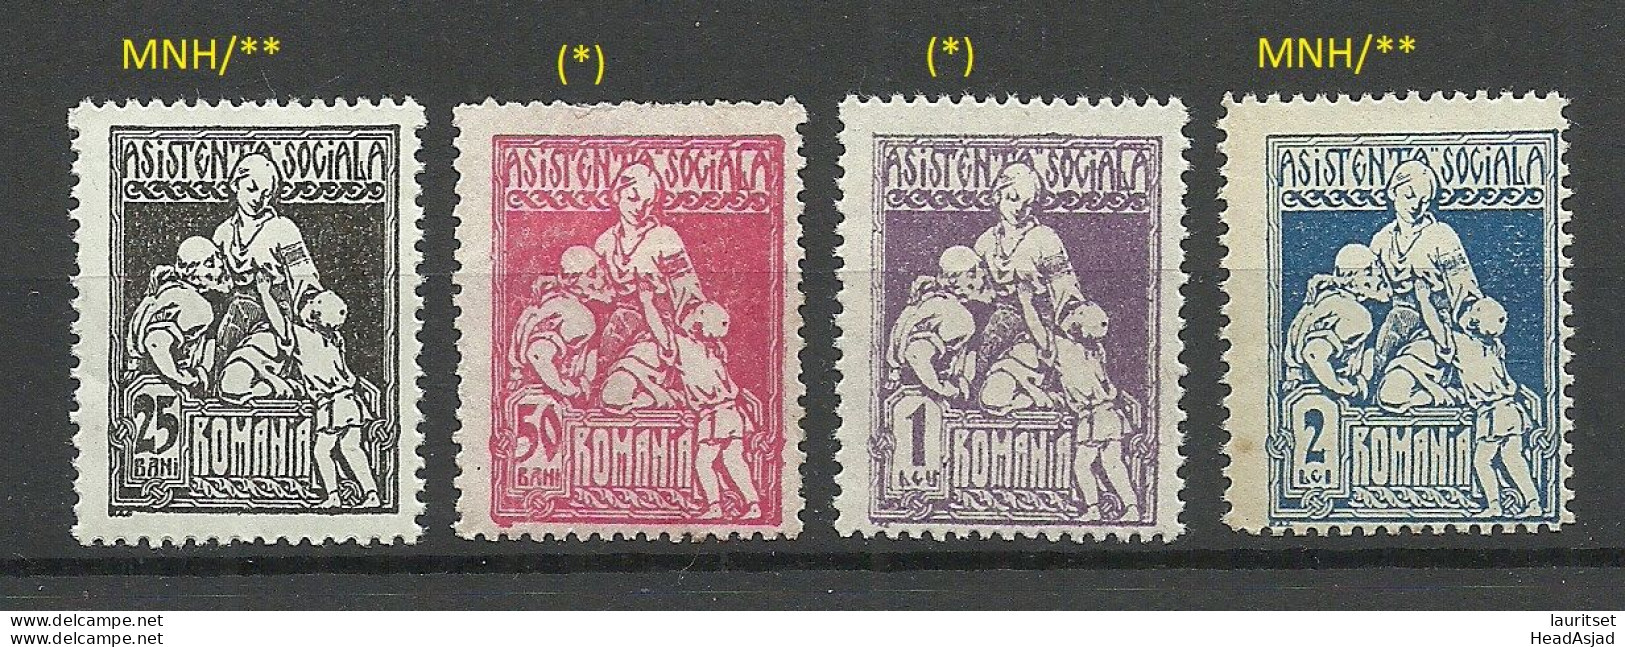 ROMANIA ROMANA 1921 Asistenta Sociala Charity Charite Wohlfahrt Krankenpflege Tax Steuermarken, 4 Stamps, Unused MNH/(*) - Nuovi